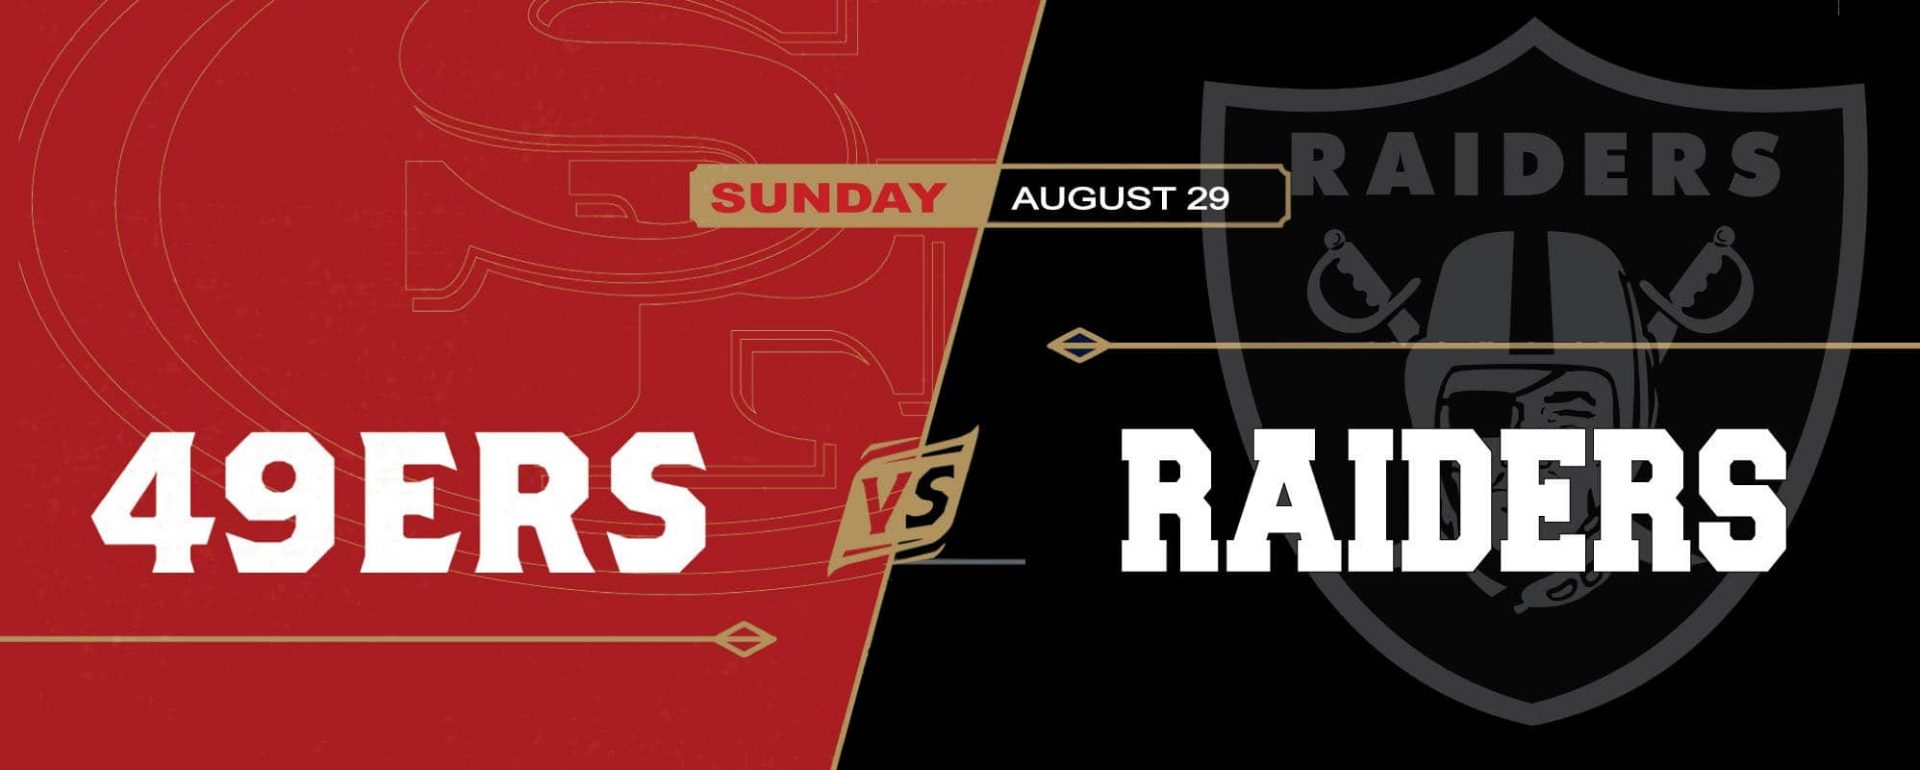 San Francisco 49ers vs. Las Vegas Raiders - CrawlSF